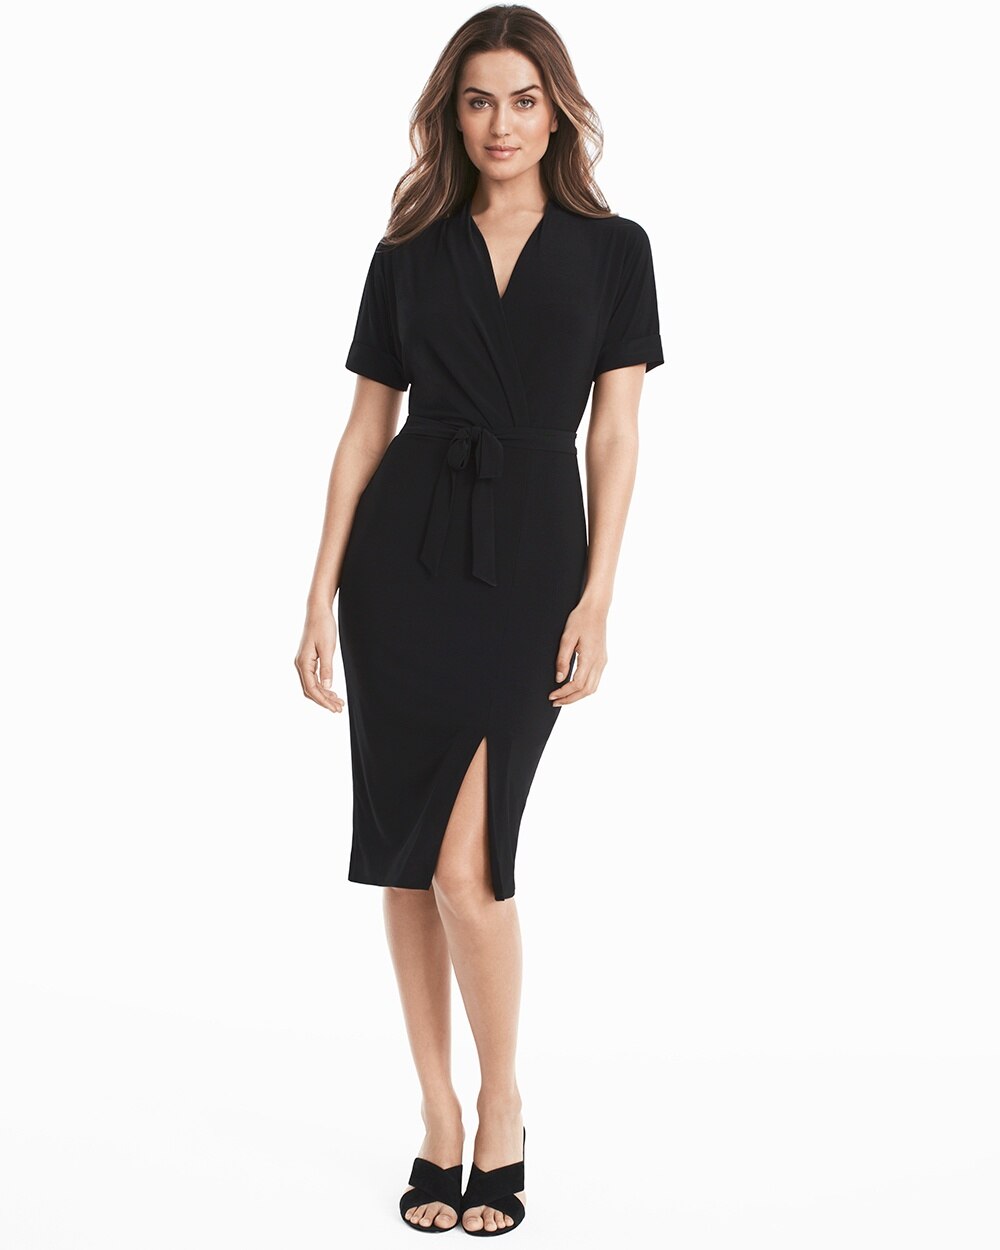 Buy > black wrap dress short sleeve > in stock